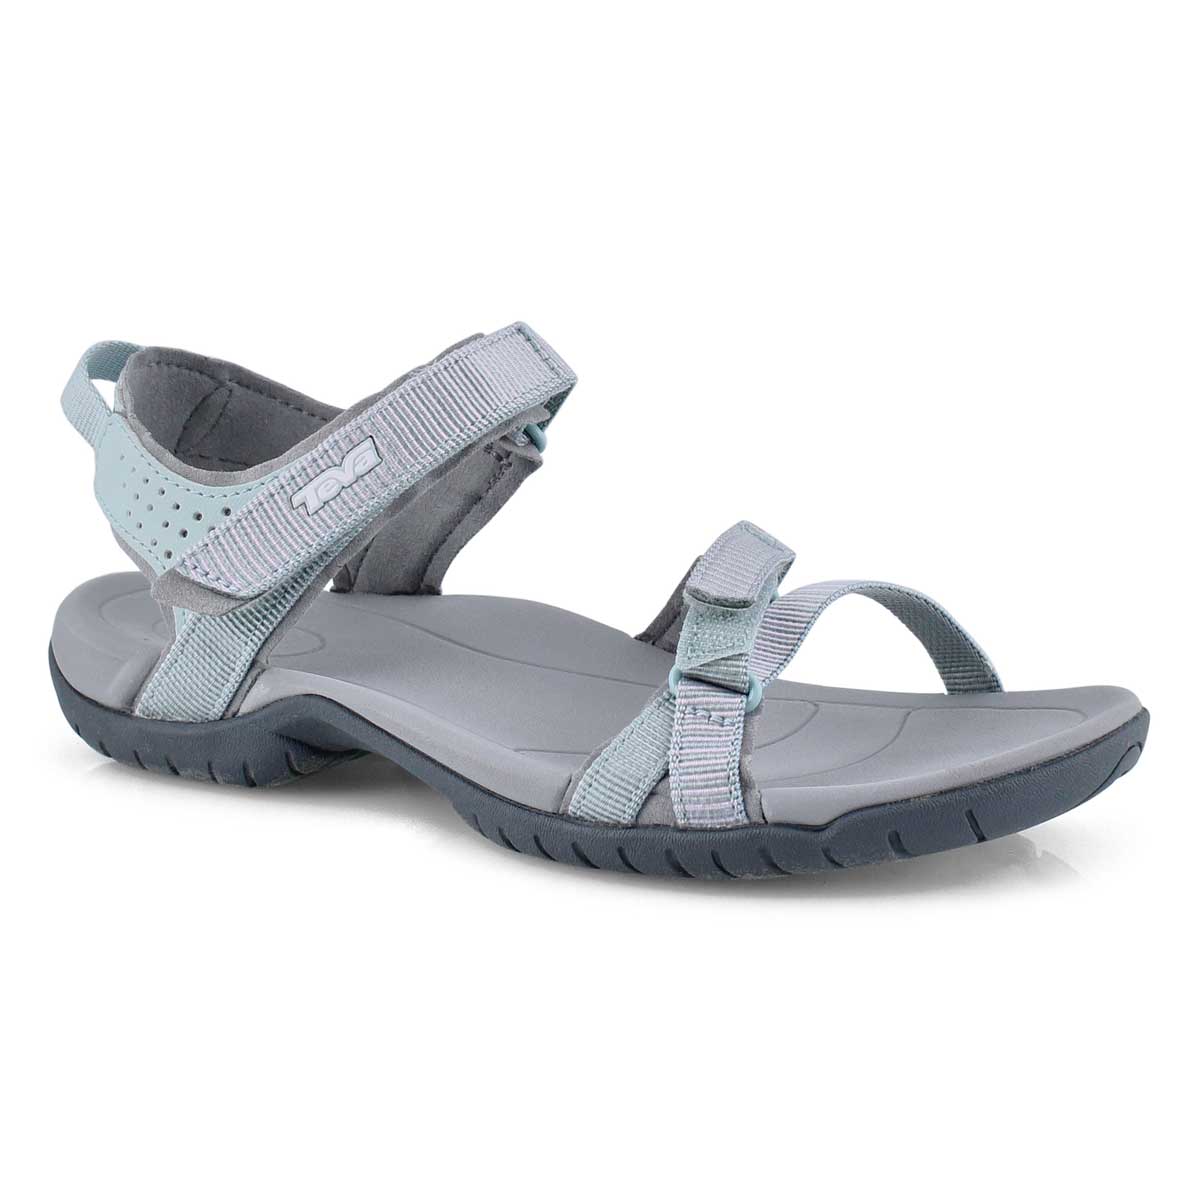 VERRA gray mist sport sandals | SoftMoc USA